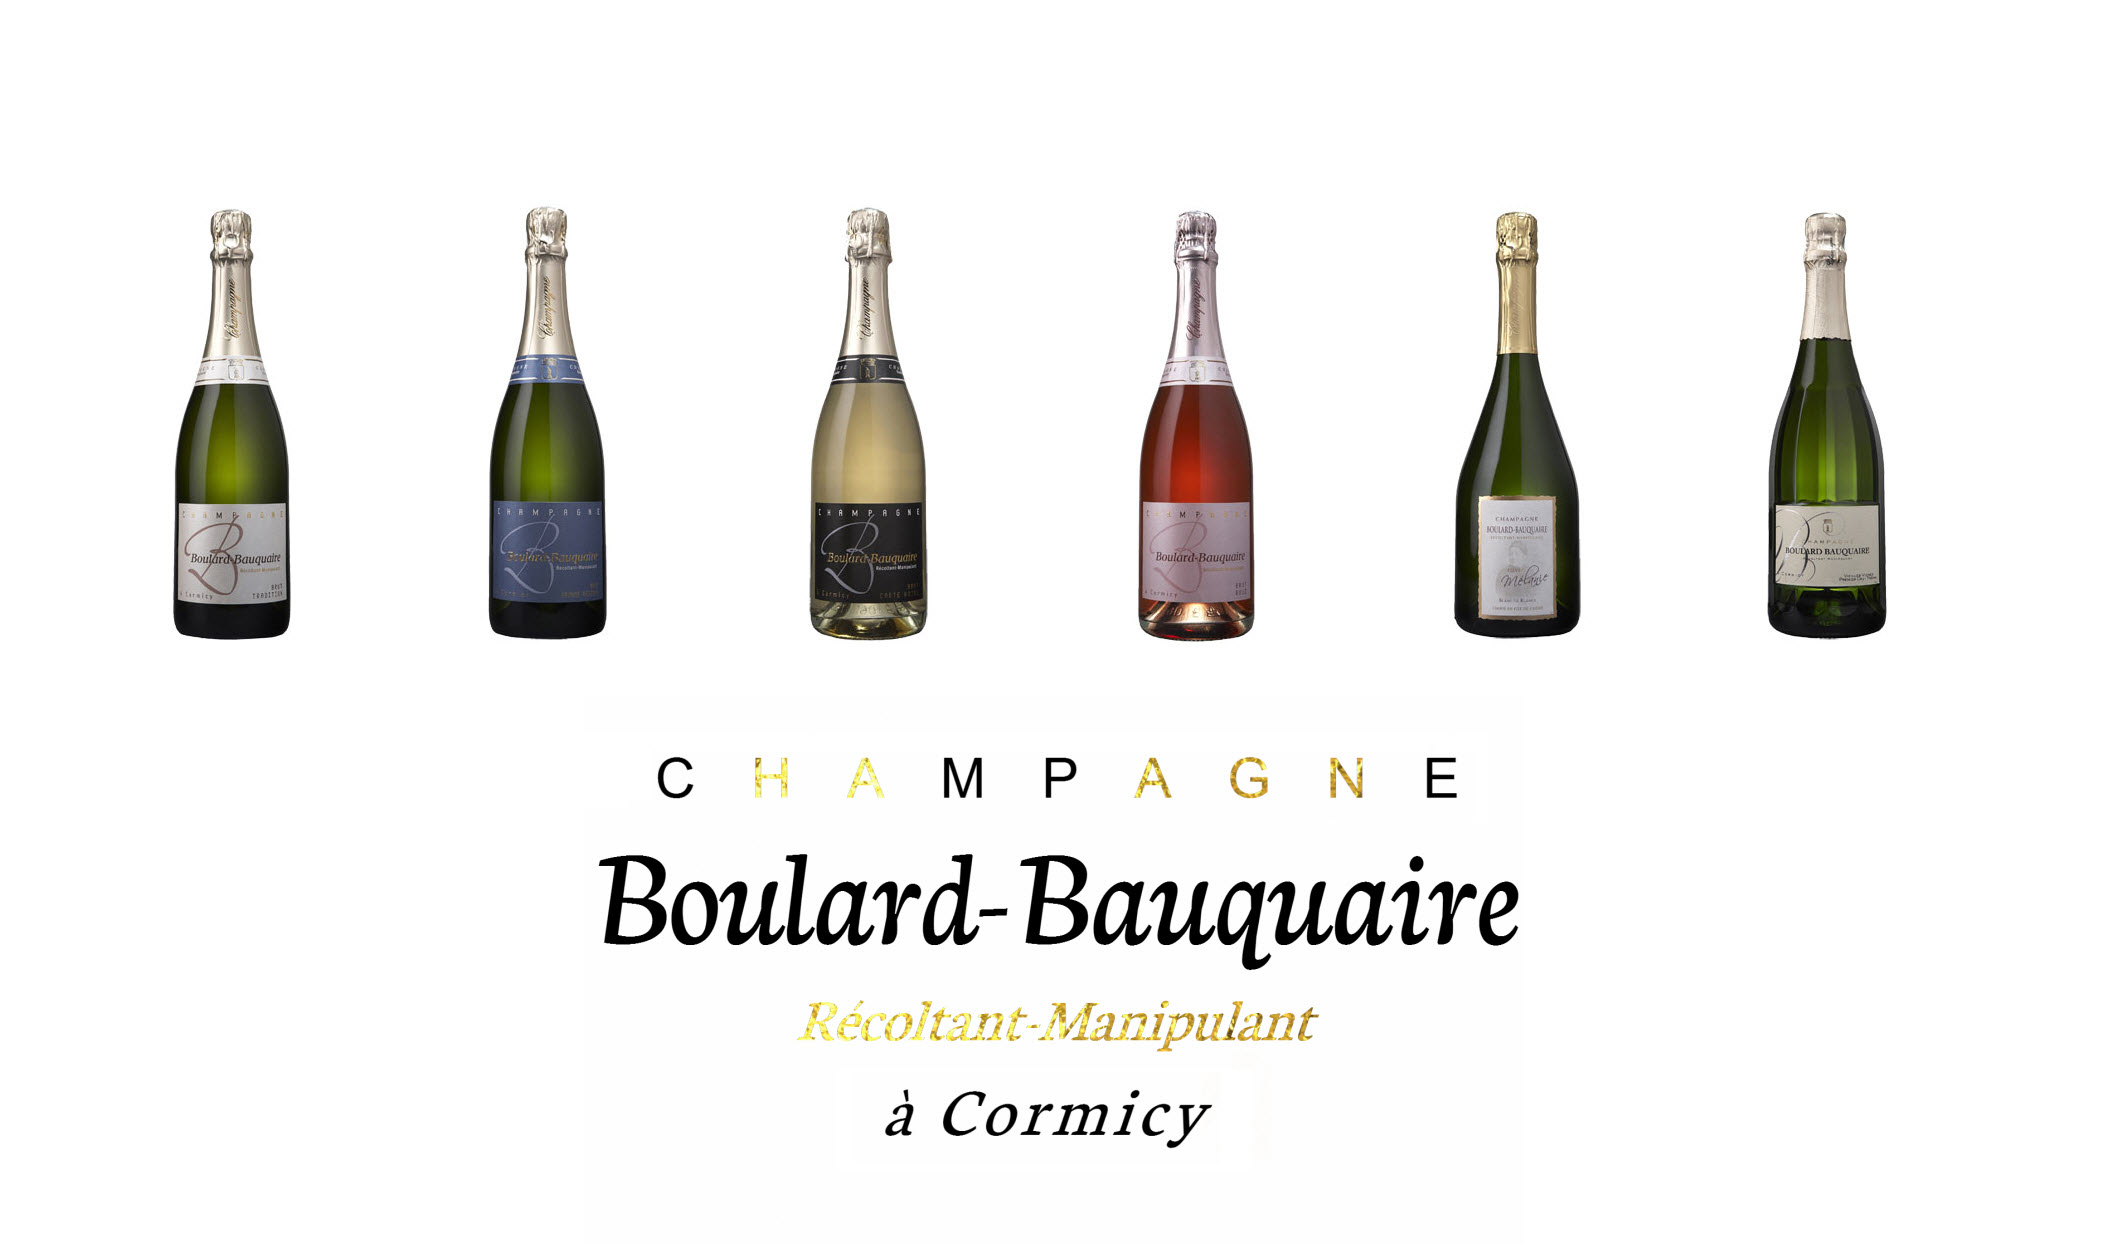 Champagne Boulard-Bauquaire